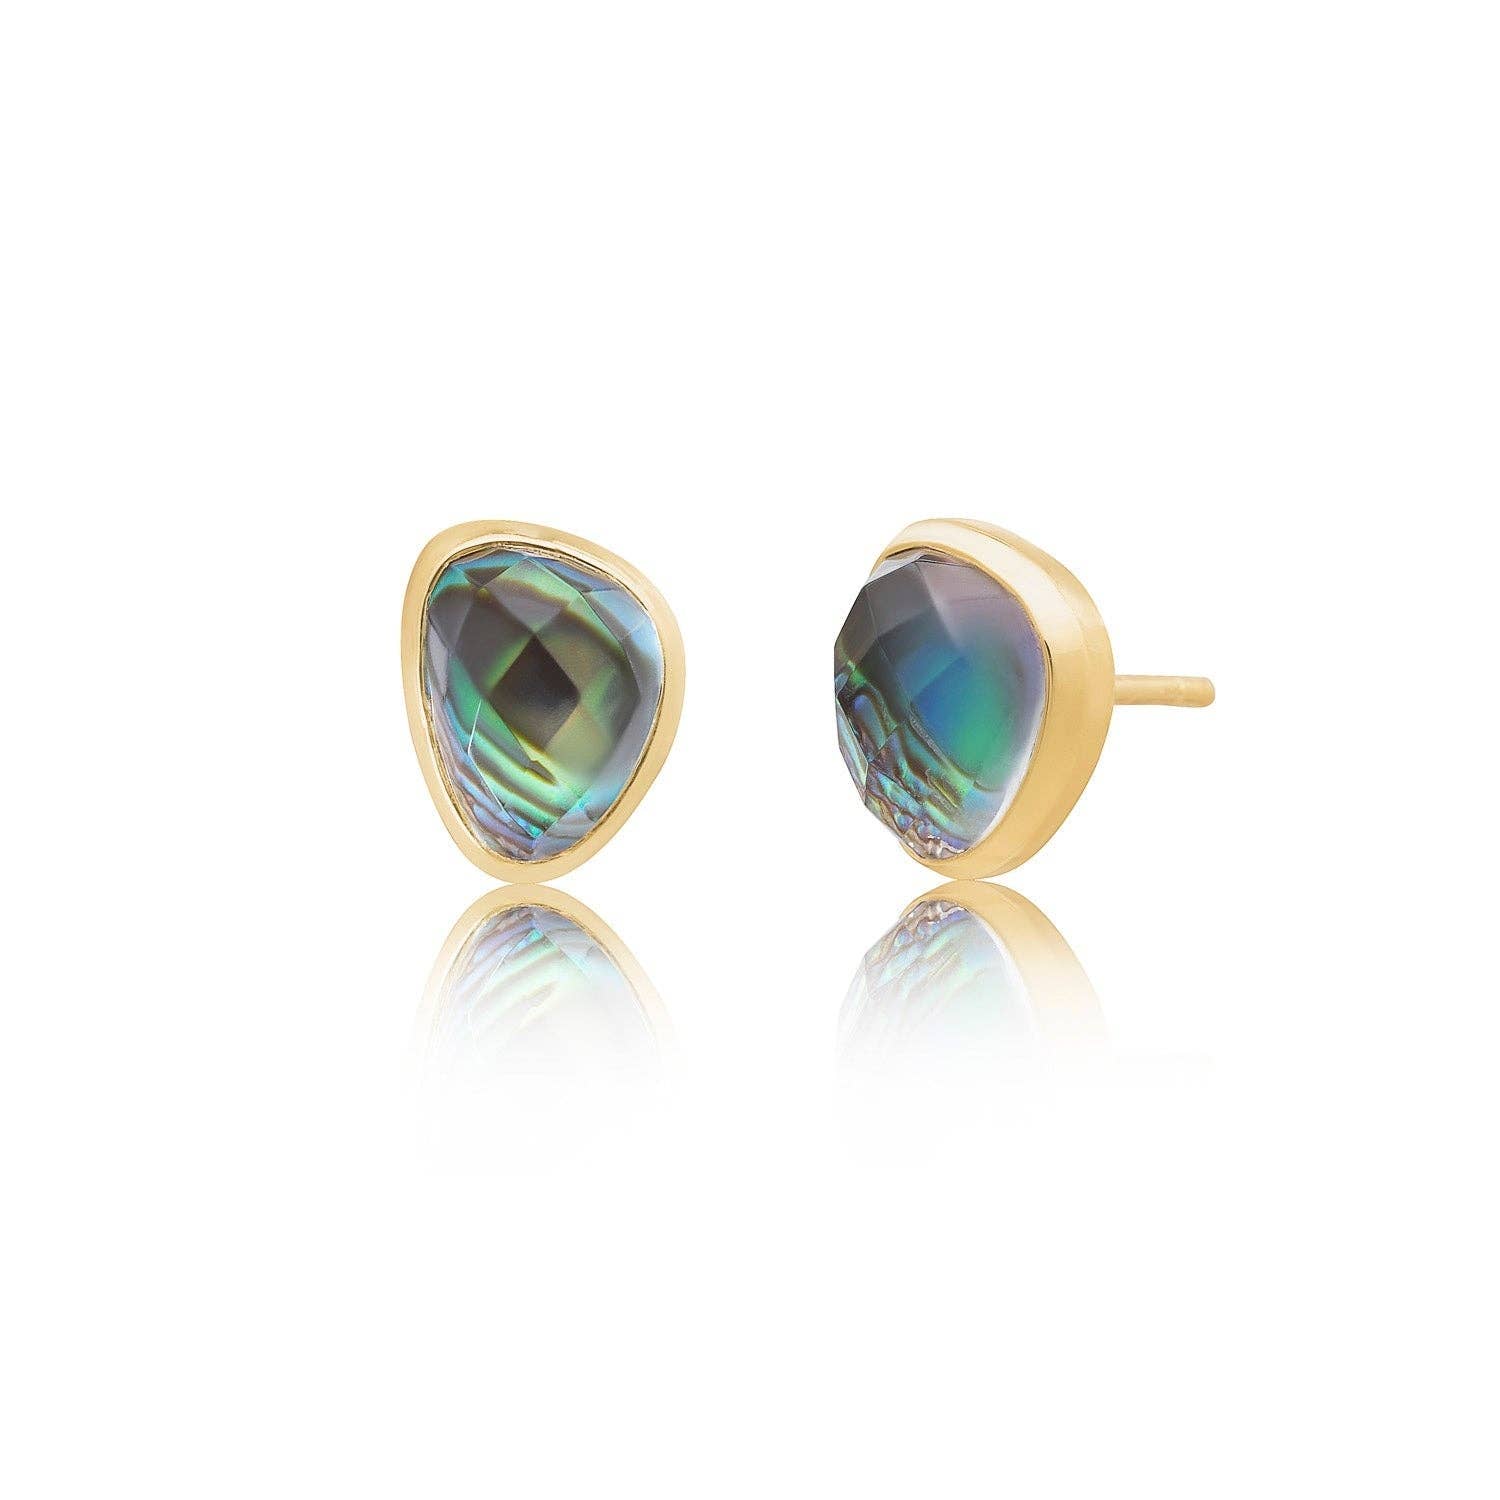 Odyssey Doublet Gold Stud Earrings: Abalone